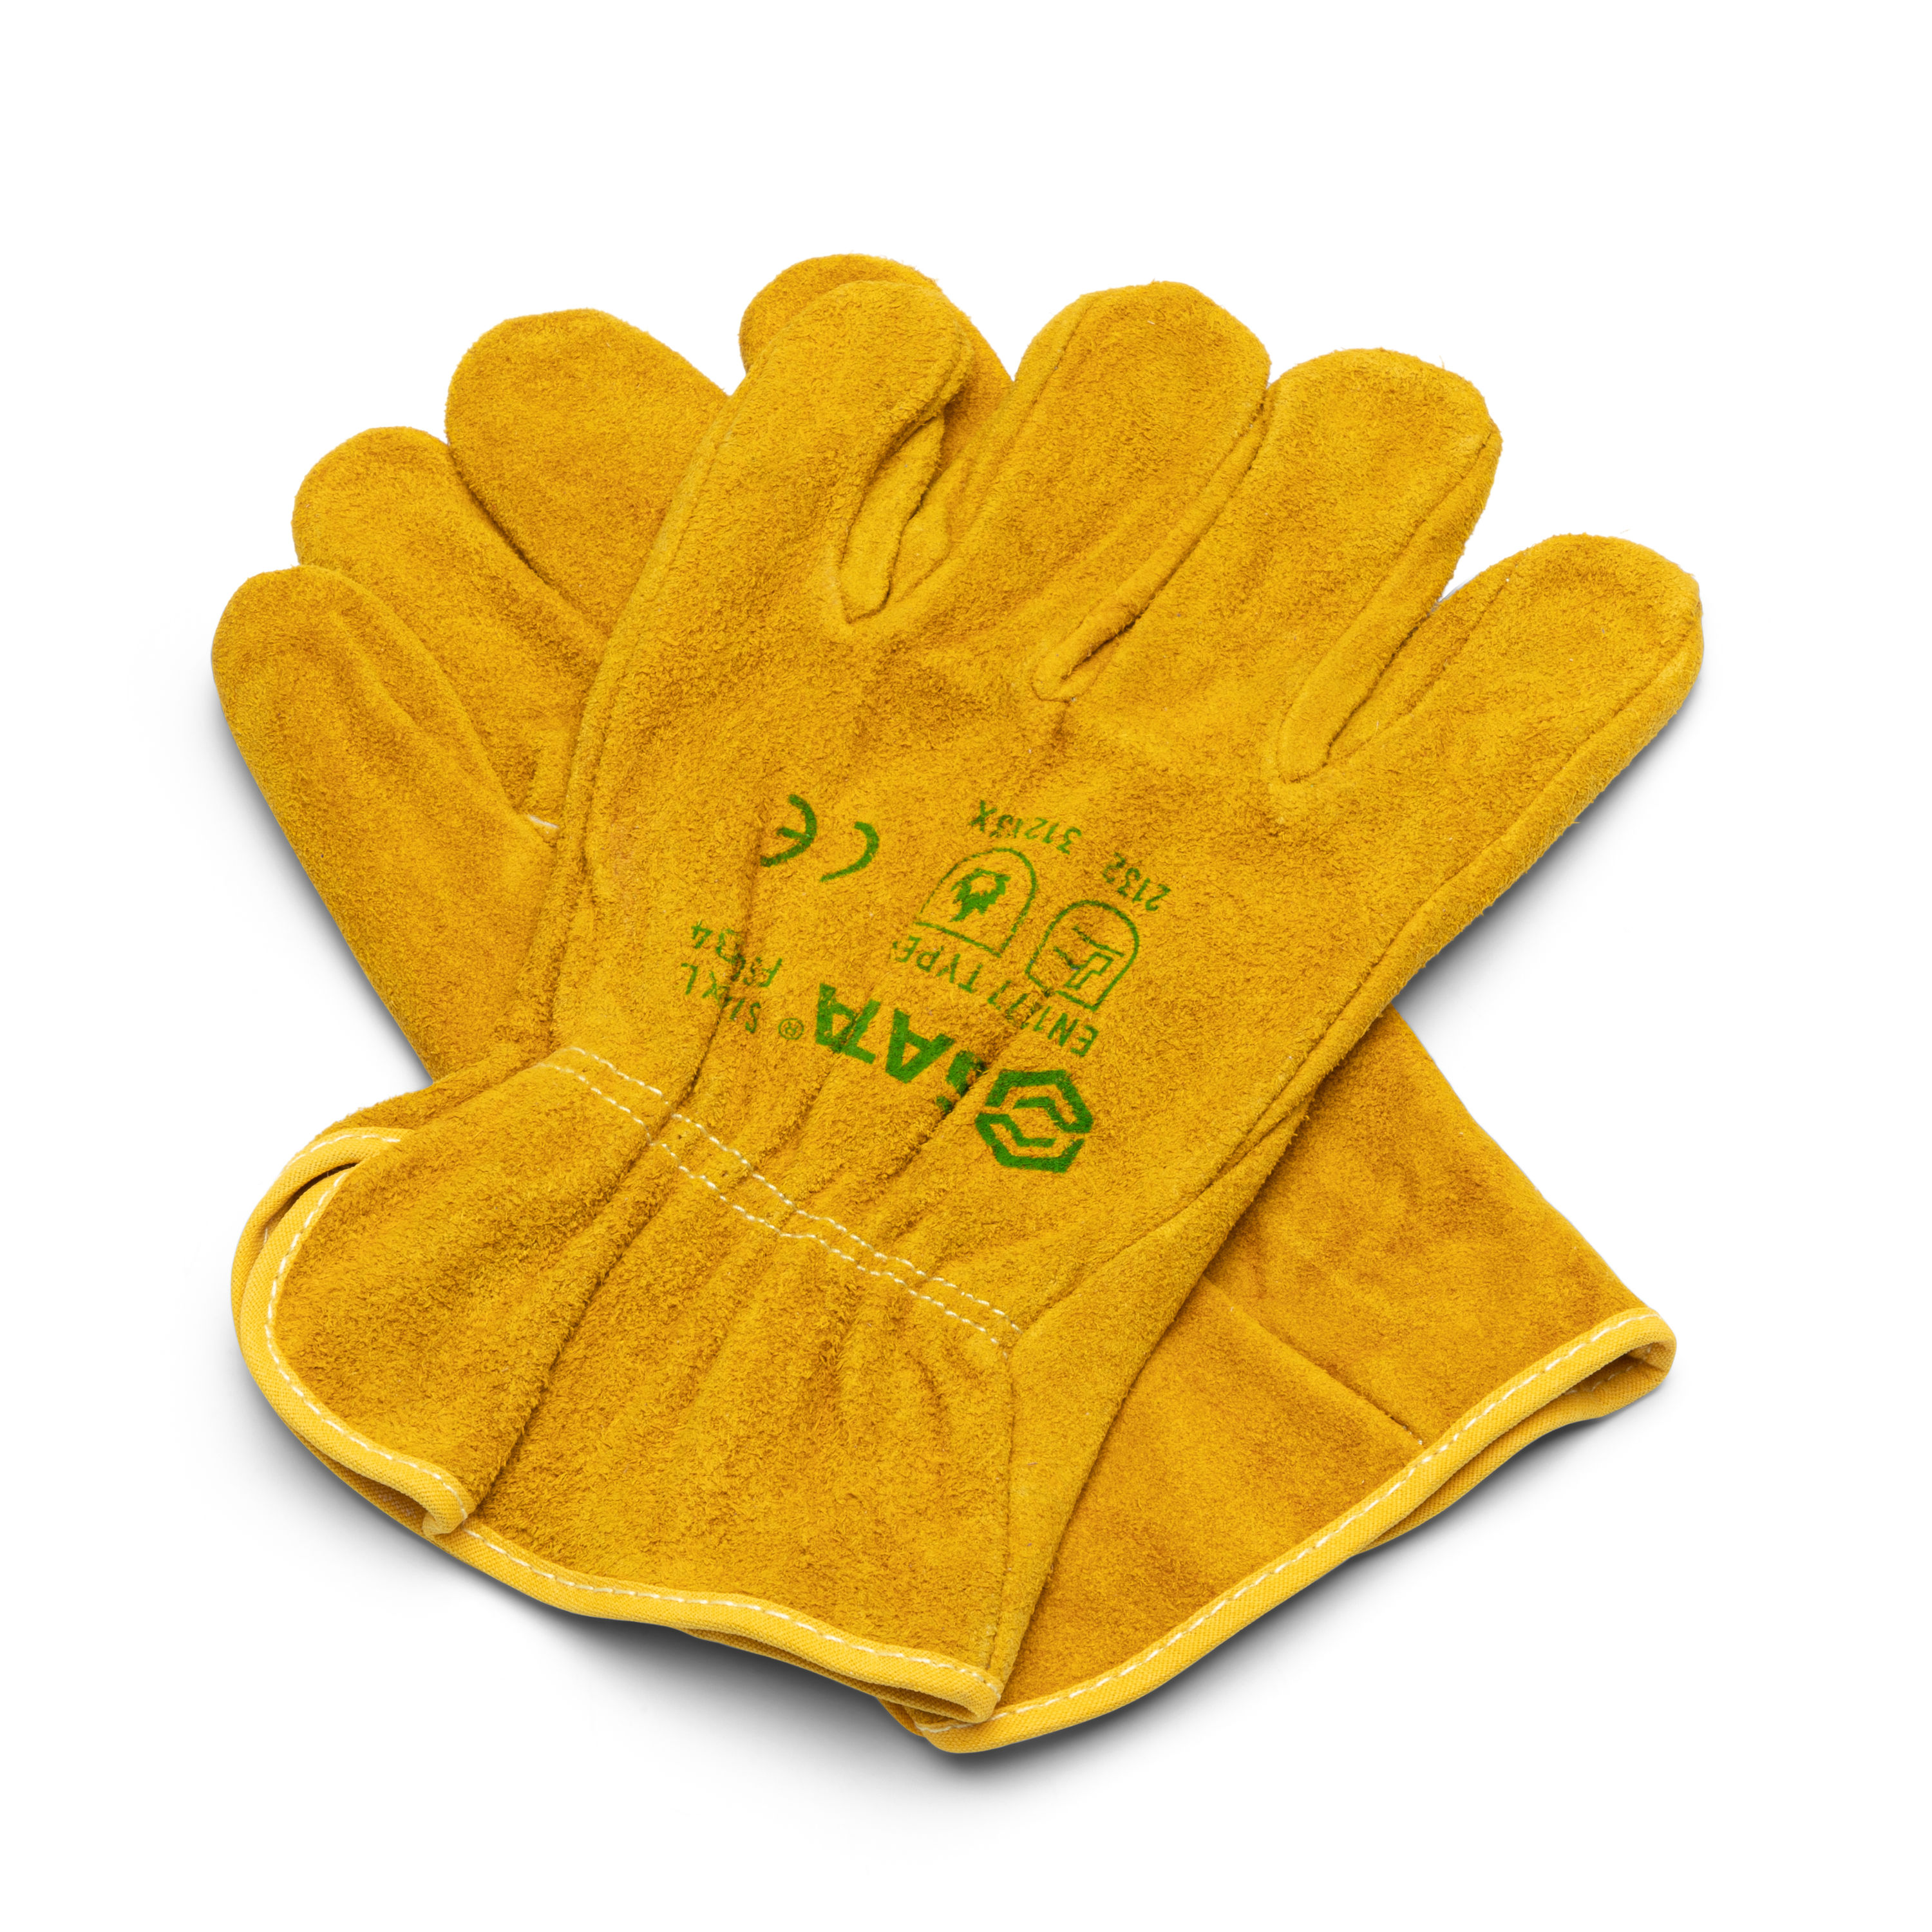 Wells Lamont Men's Split Leather Slip-On Winter Work Gloves - Brown/Tan